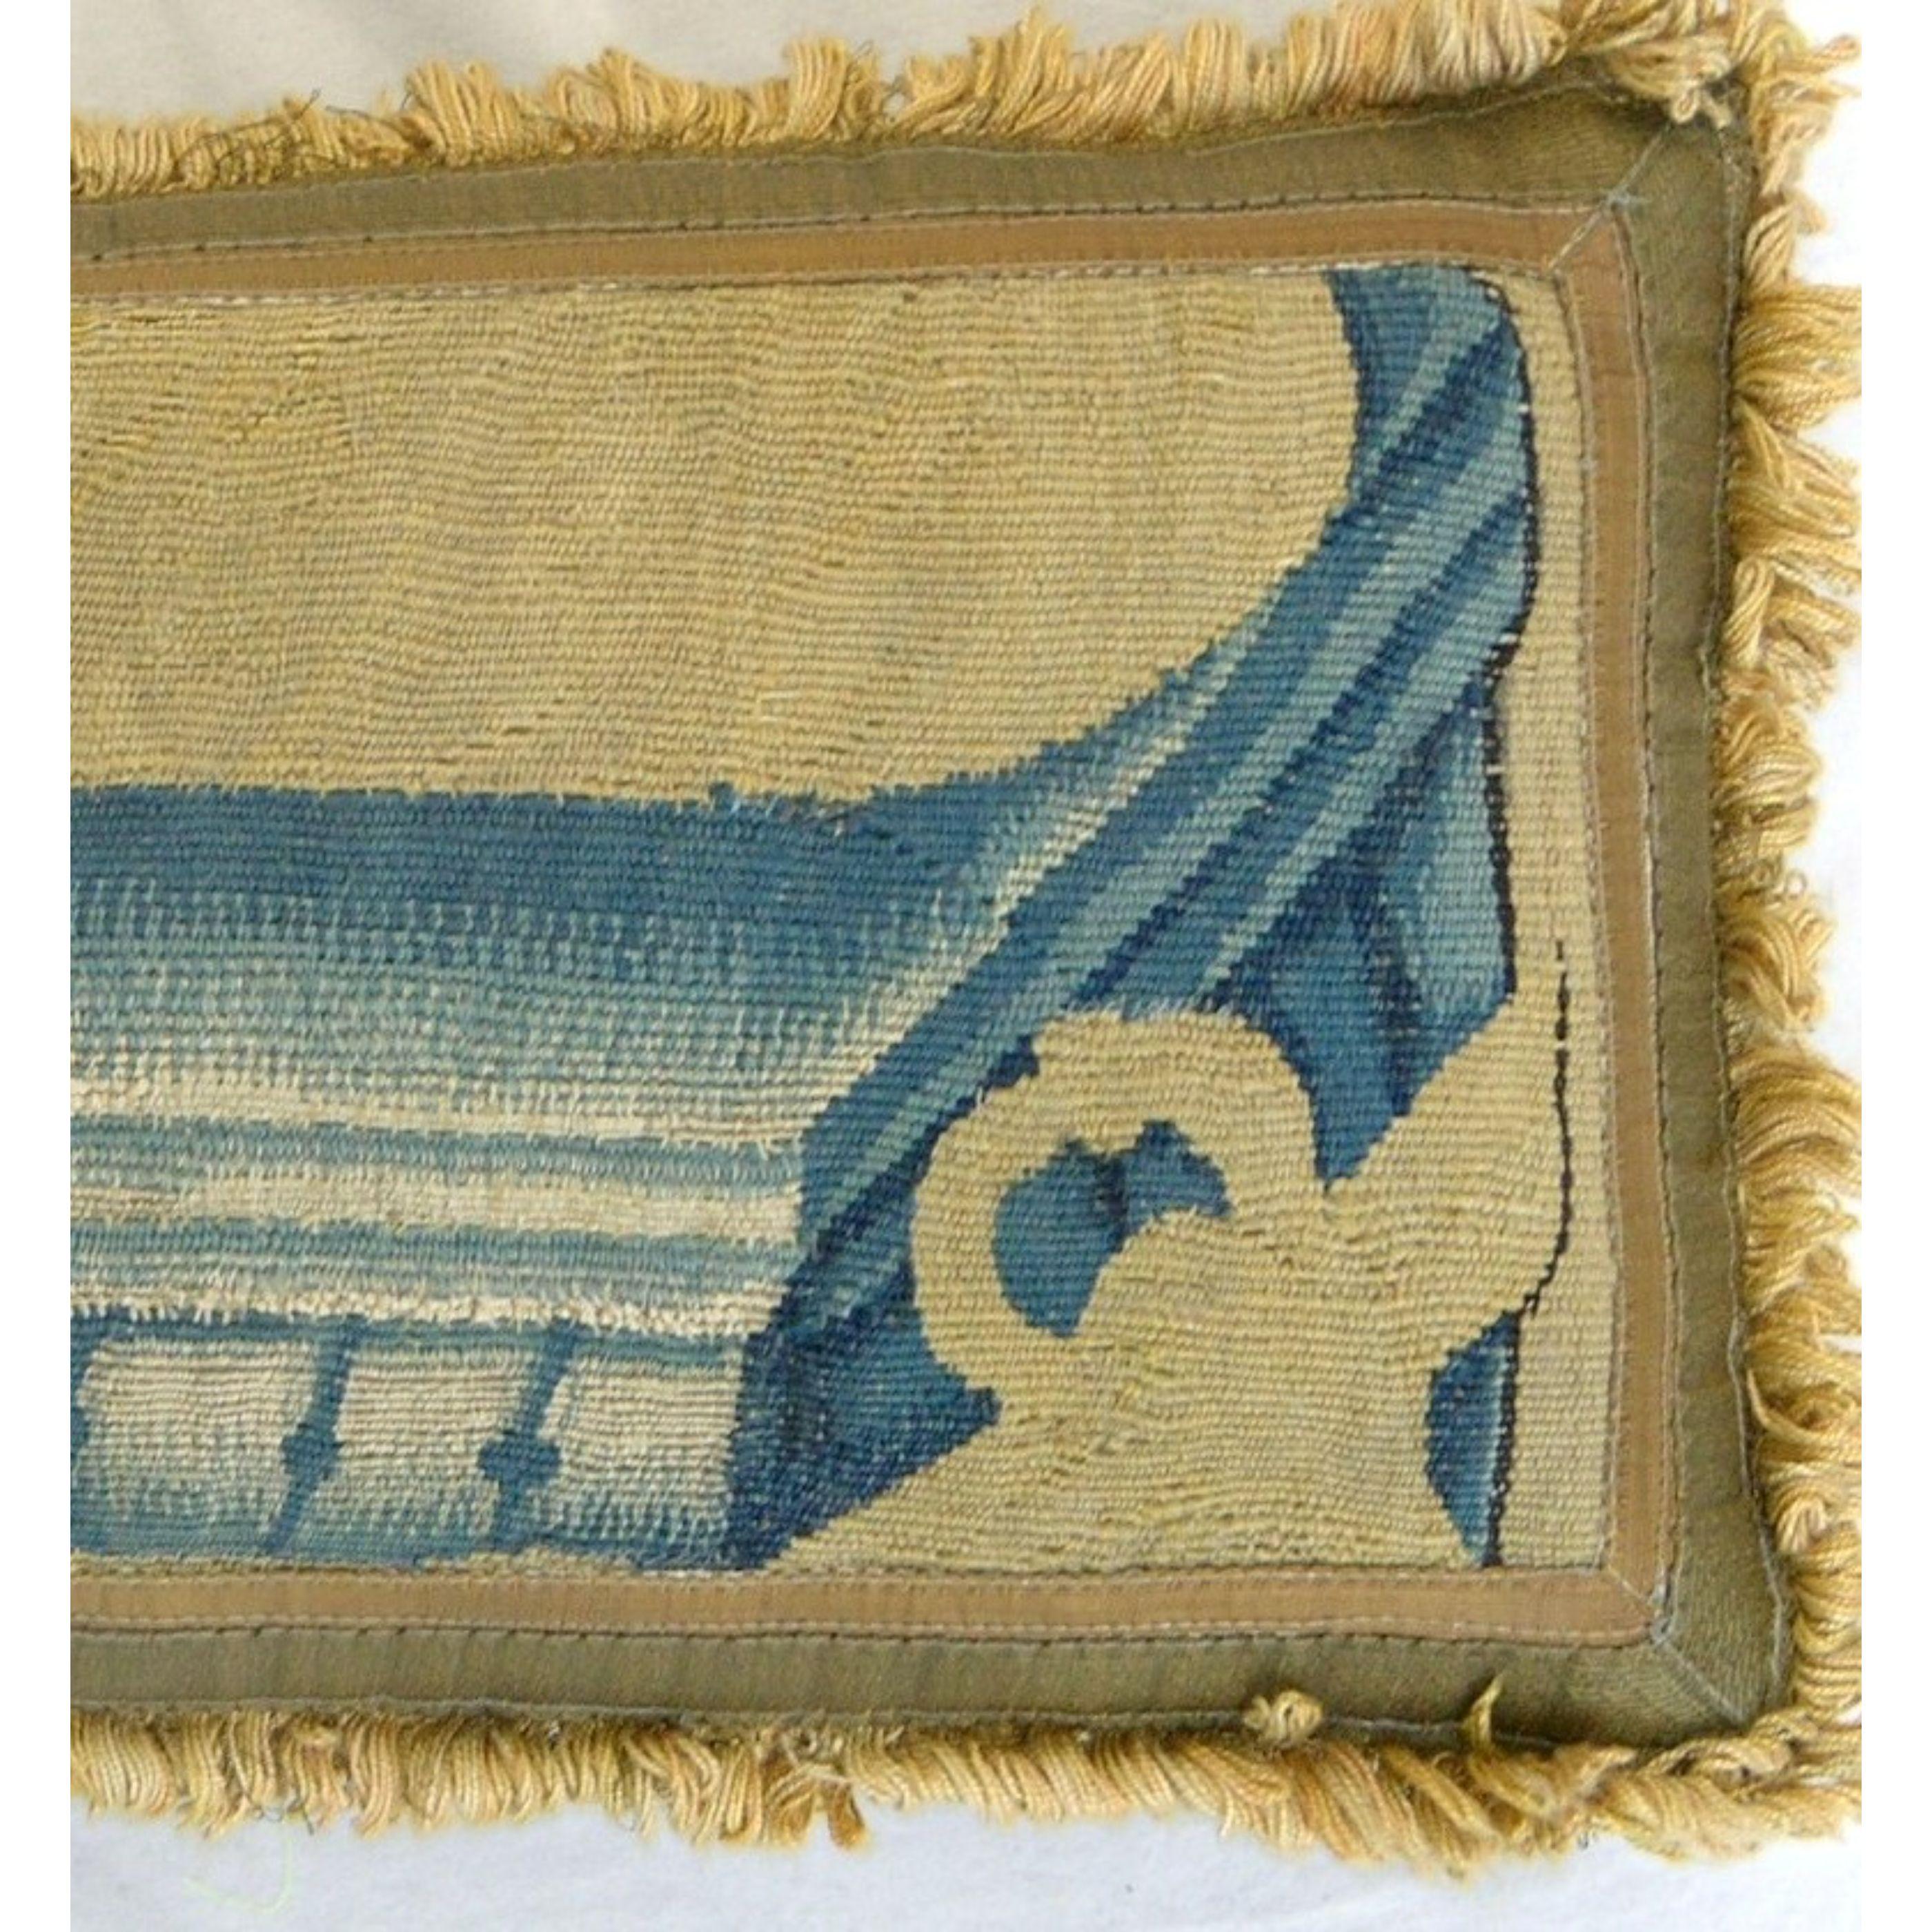 Ca. 1640 Antique Flemish Tapestry Pillow